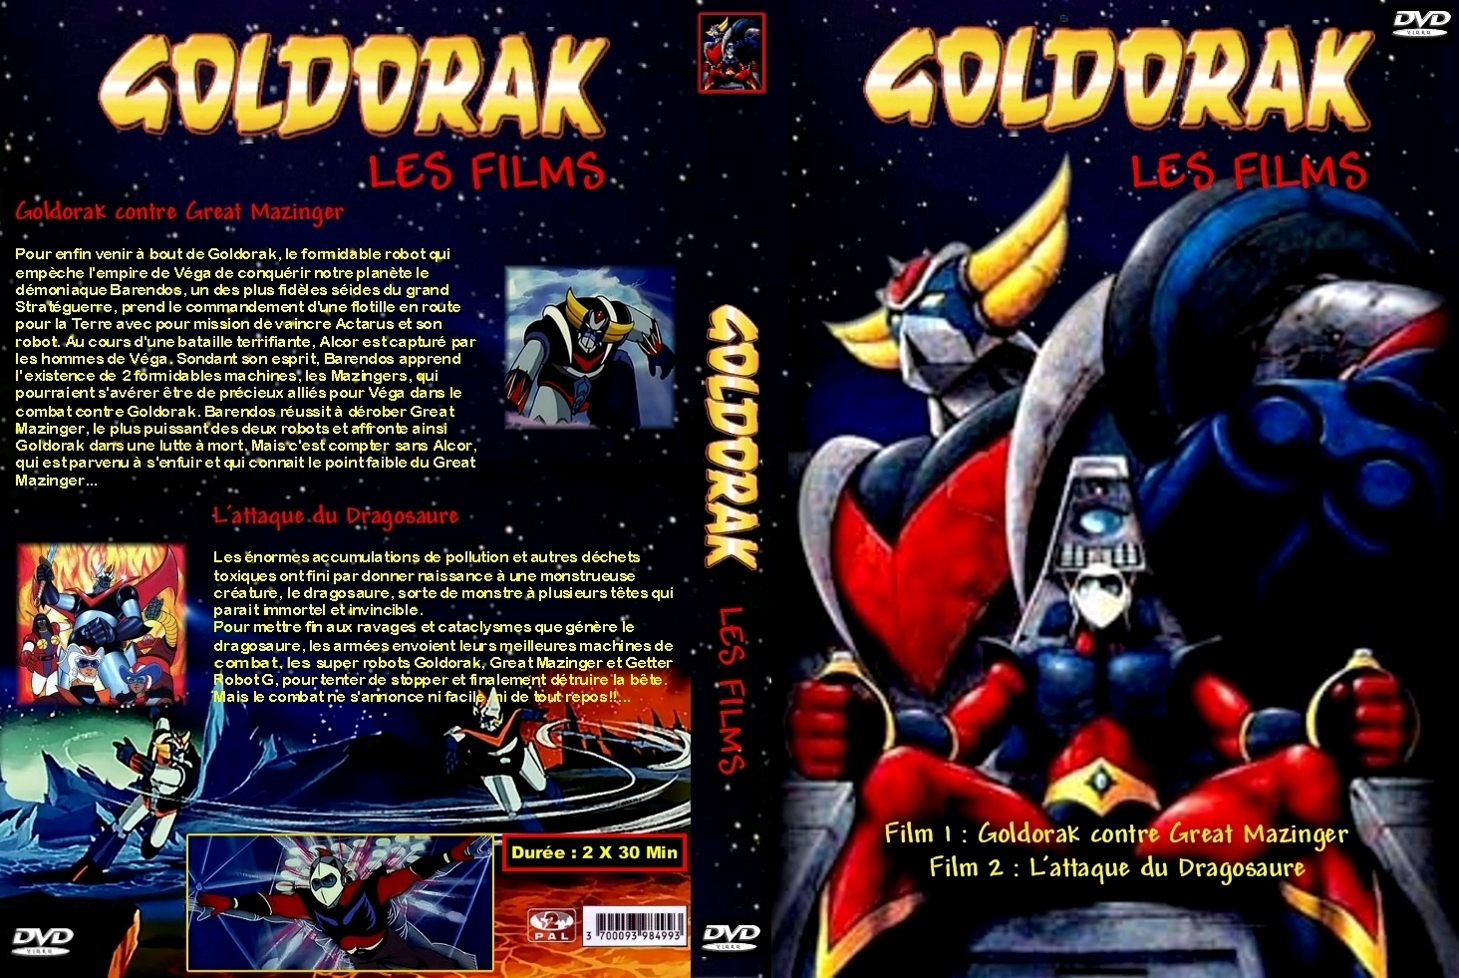 Jaquette DVD Goldorak les films custom